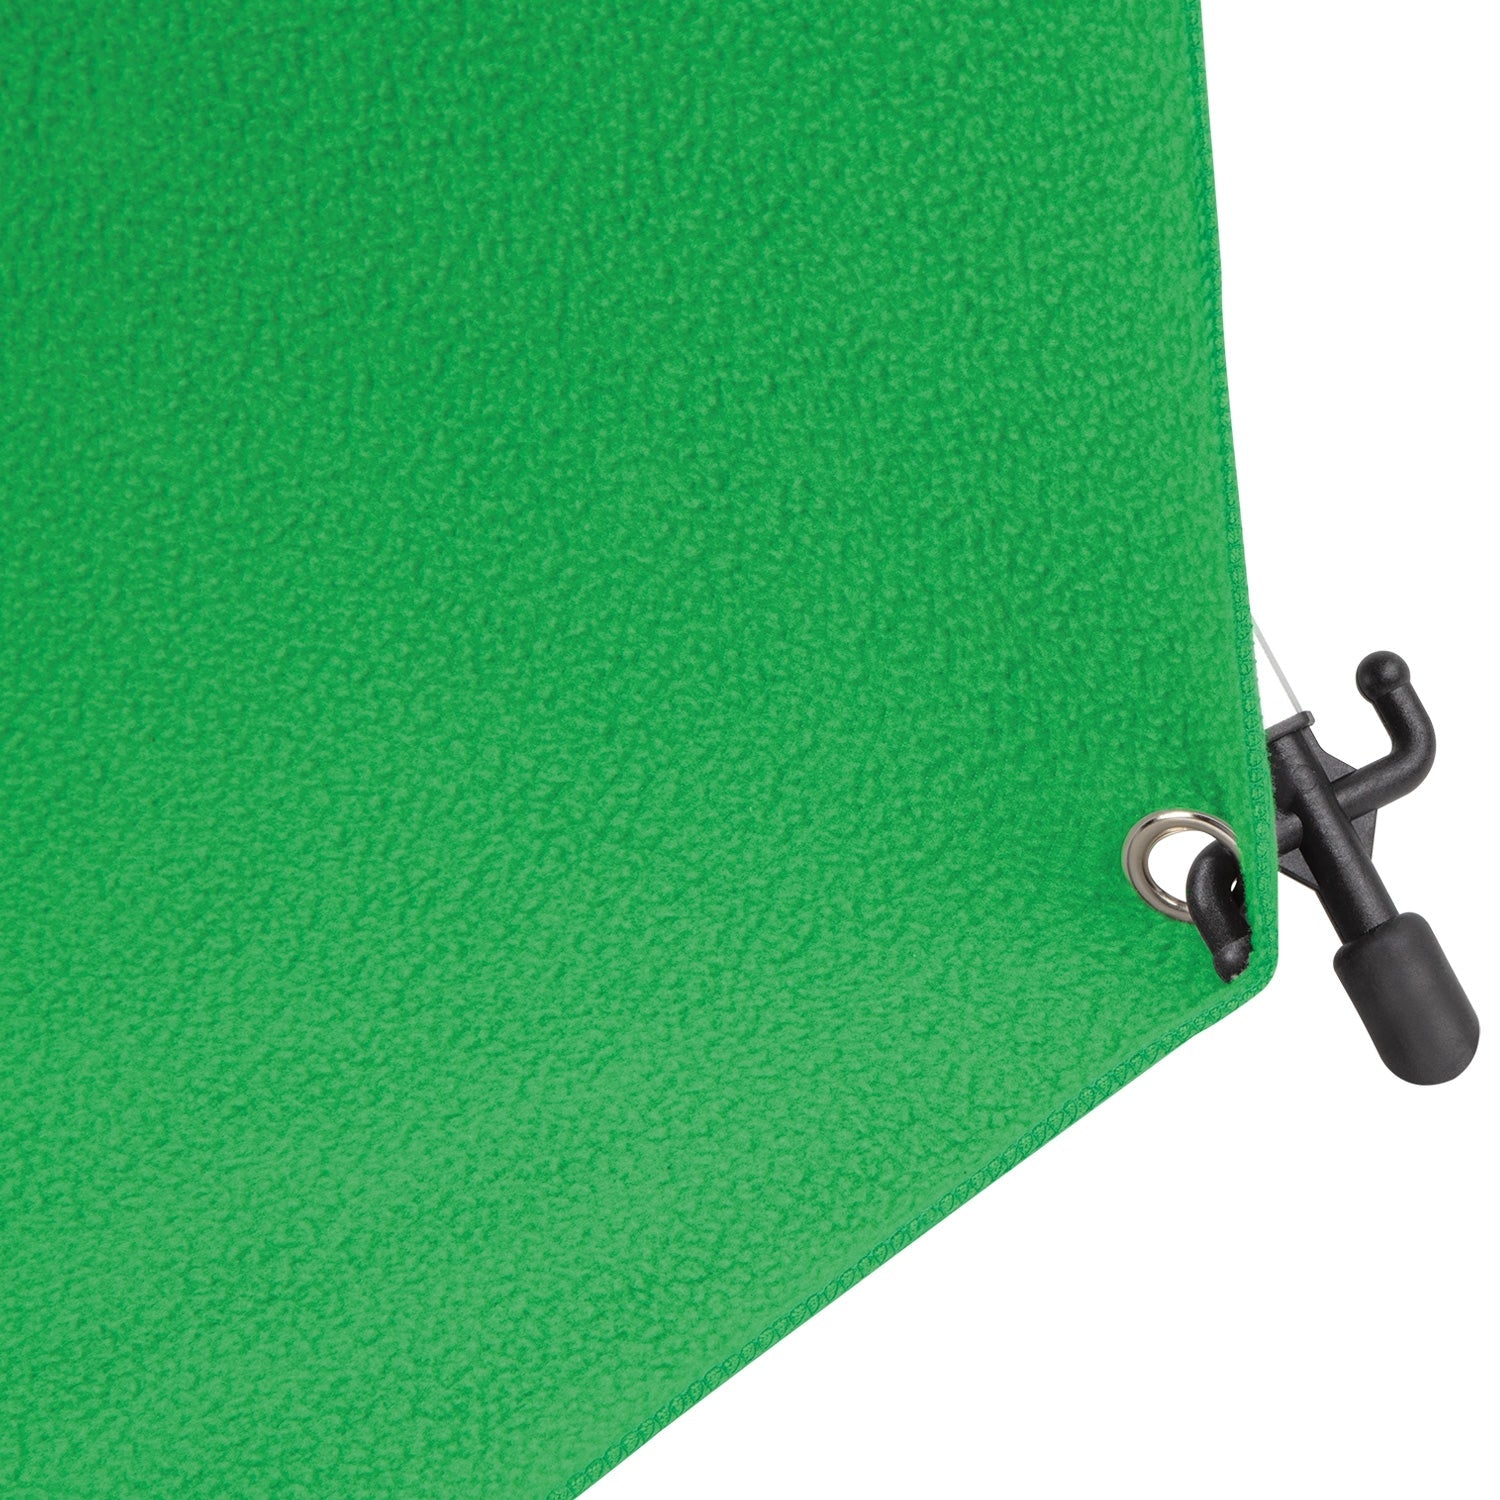 X-Drop Pro Wrinkle-Resistant Backdrop - Chroma-Key Green Screen (8' x 8')